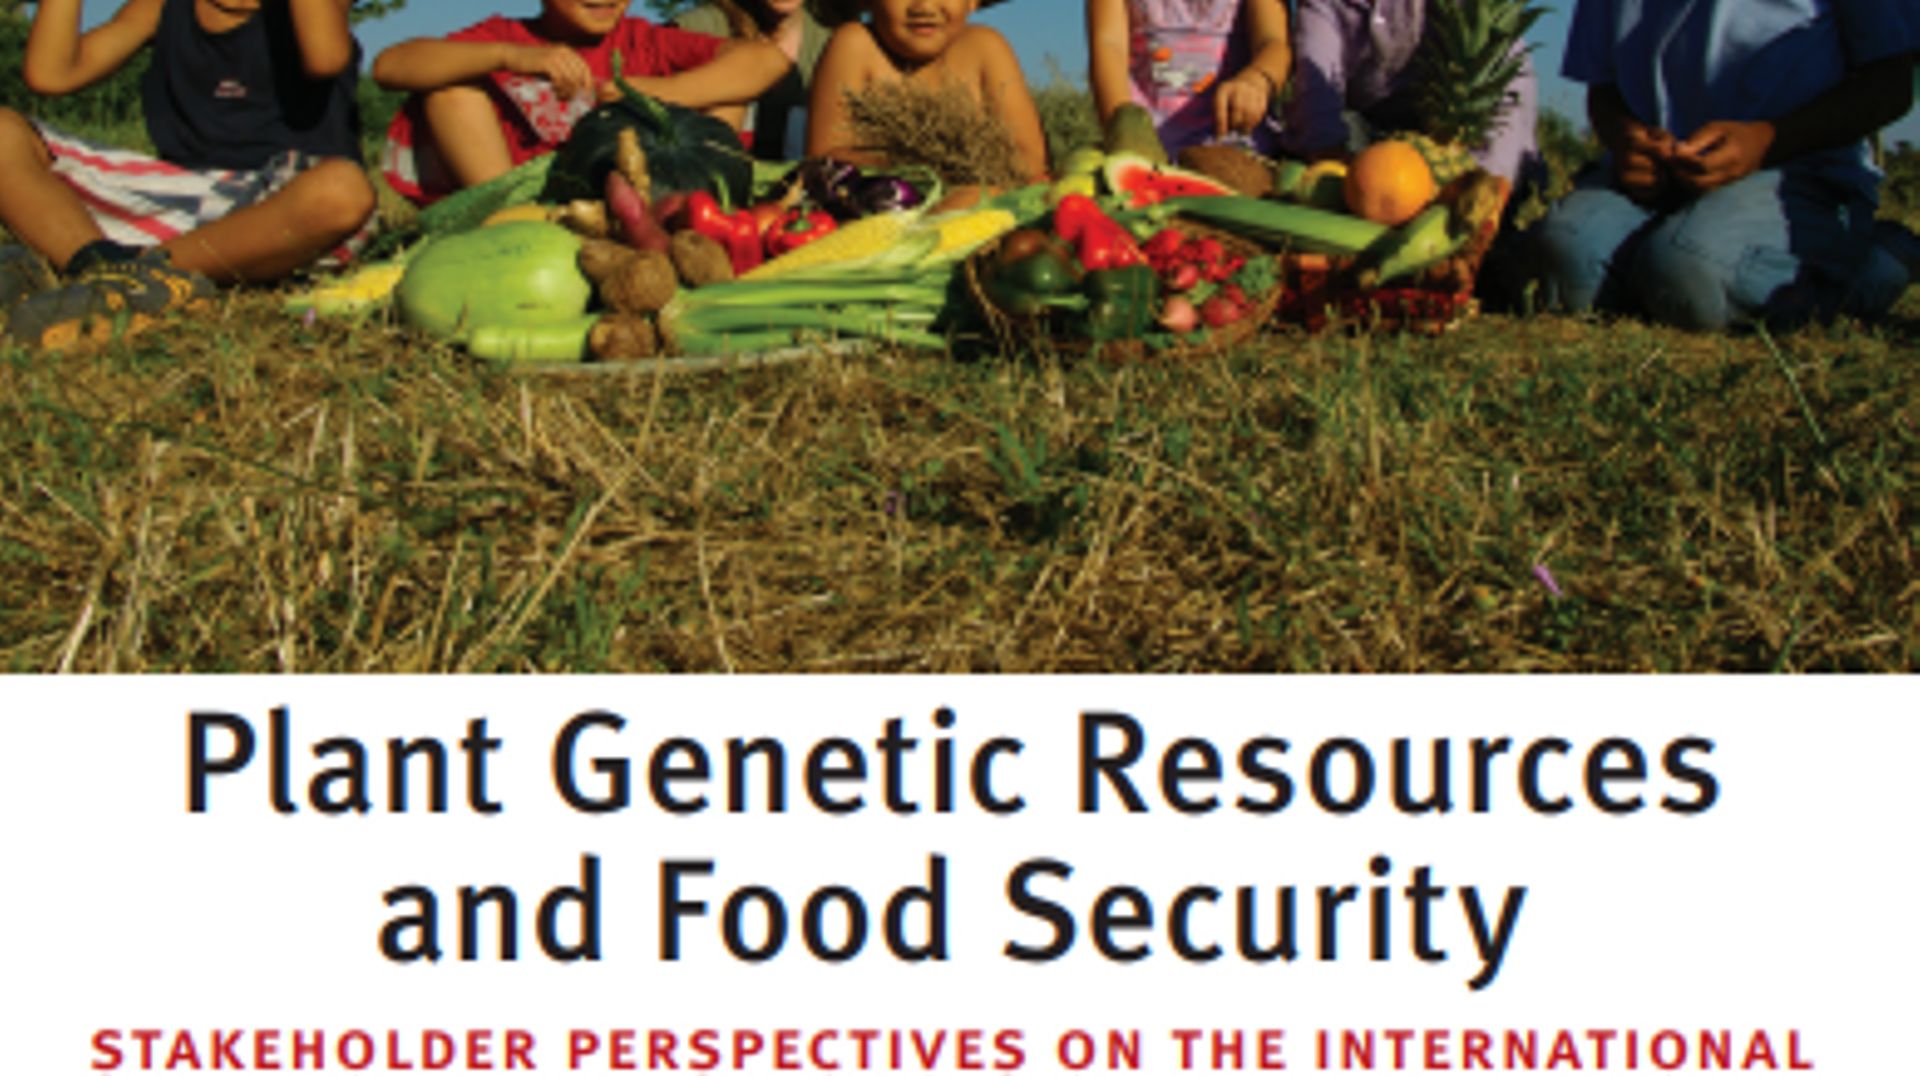 Couverture du livre "Plant Genetic Resources and Food Security" 